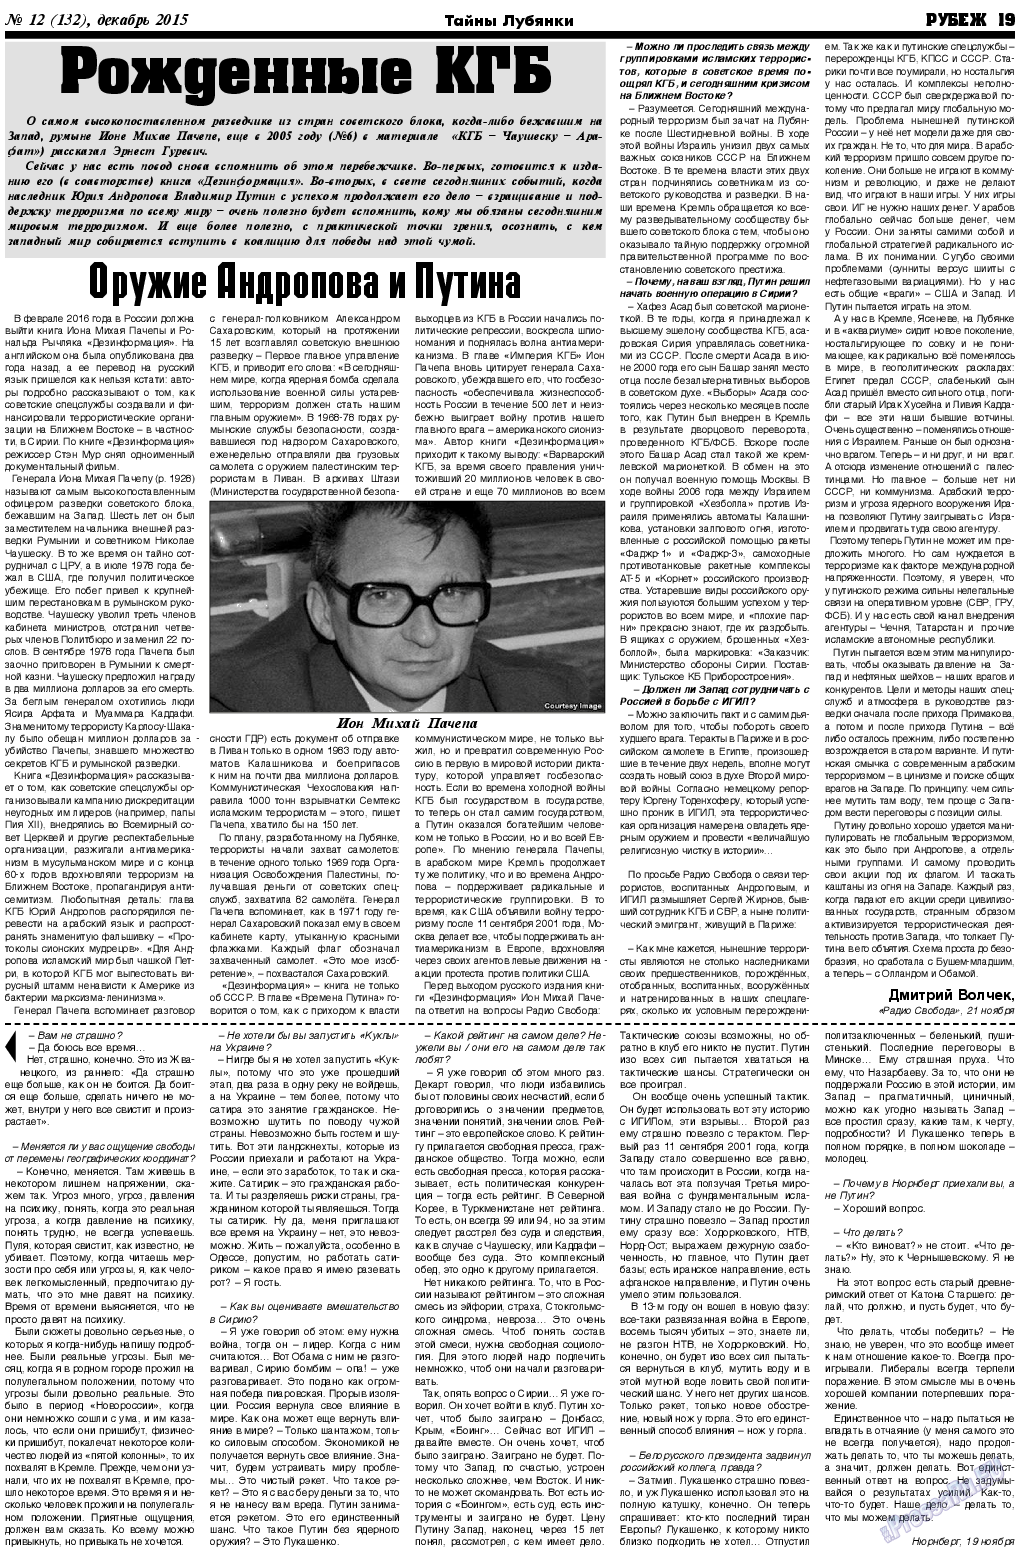 Рубеж, газета. 2015 №12 стр.19